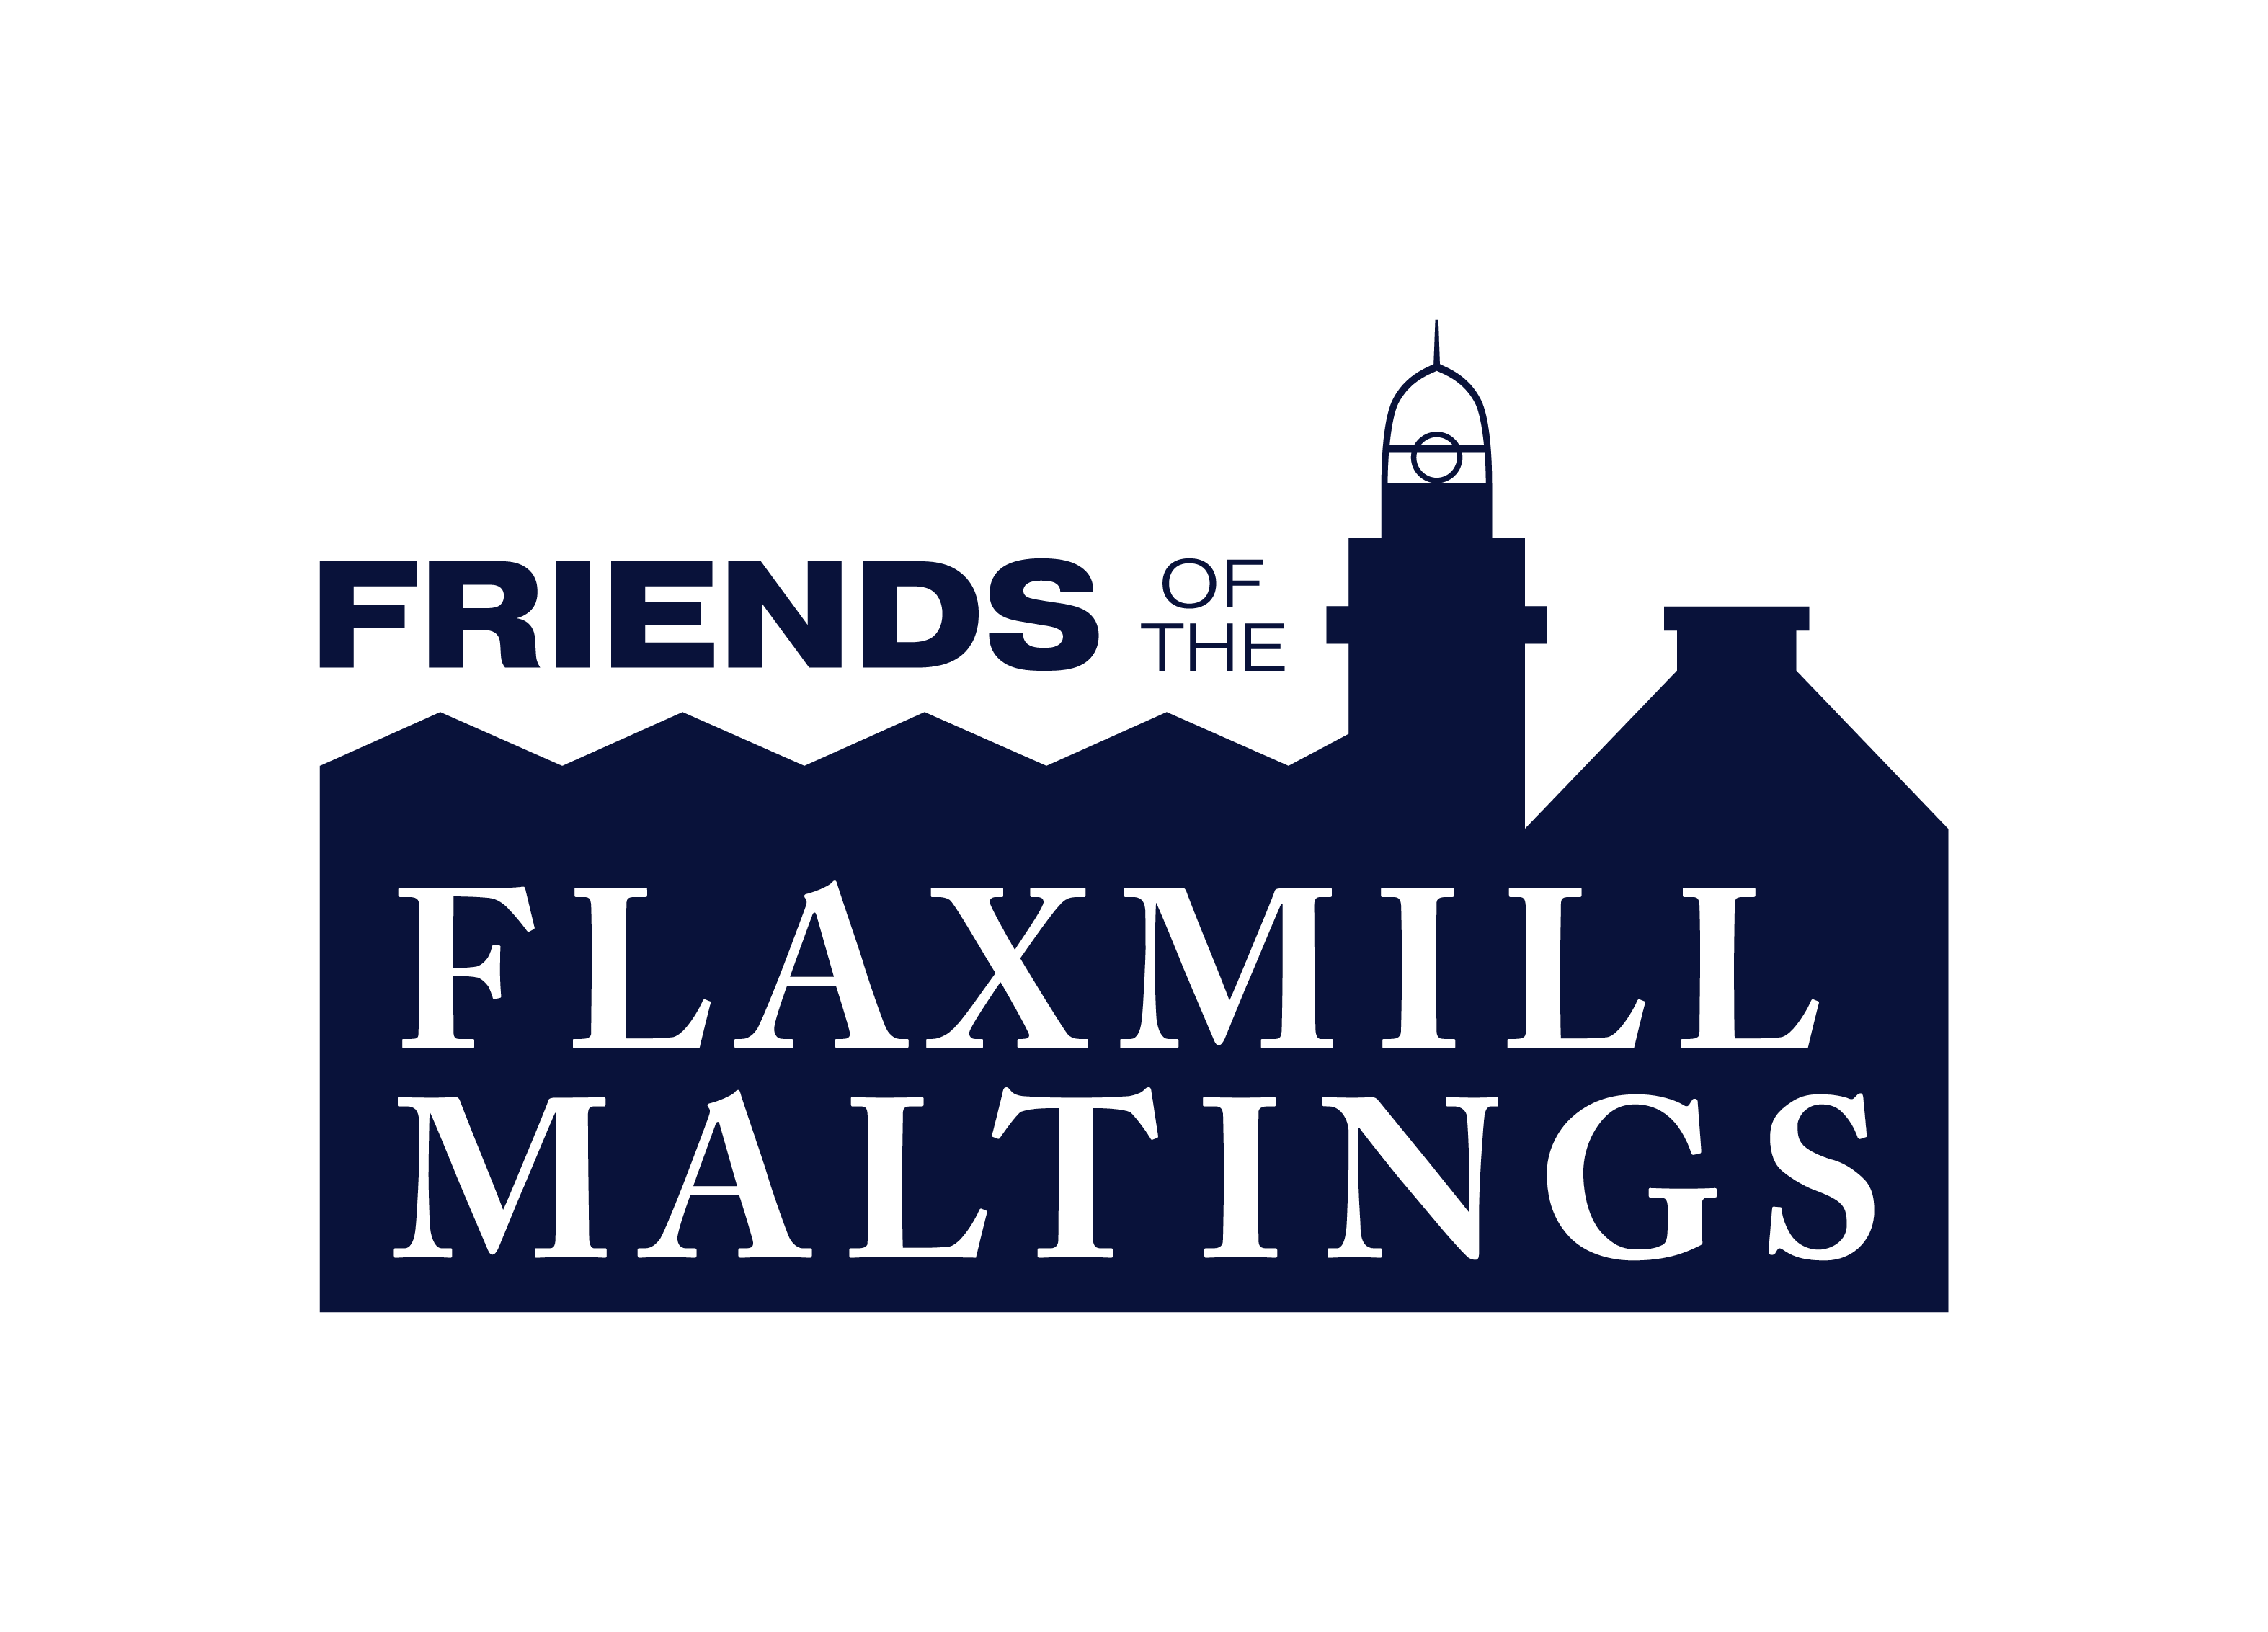 Friends of Flaxmill Maltings